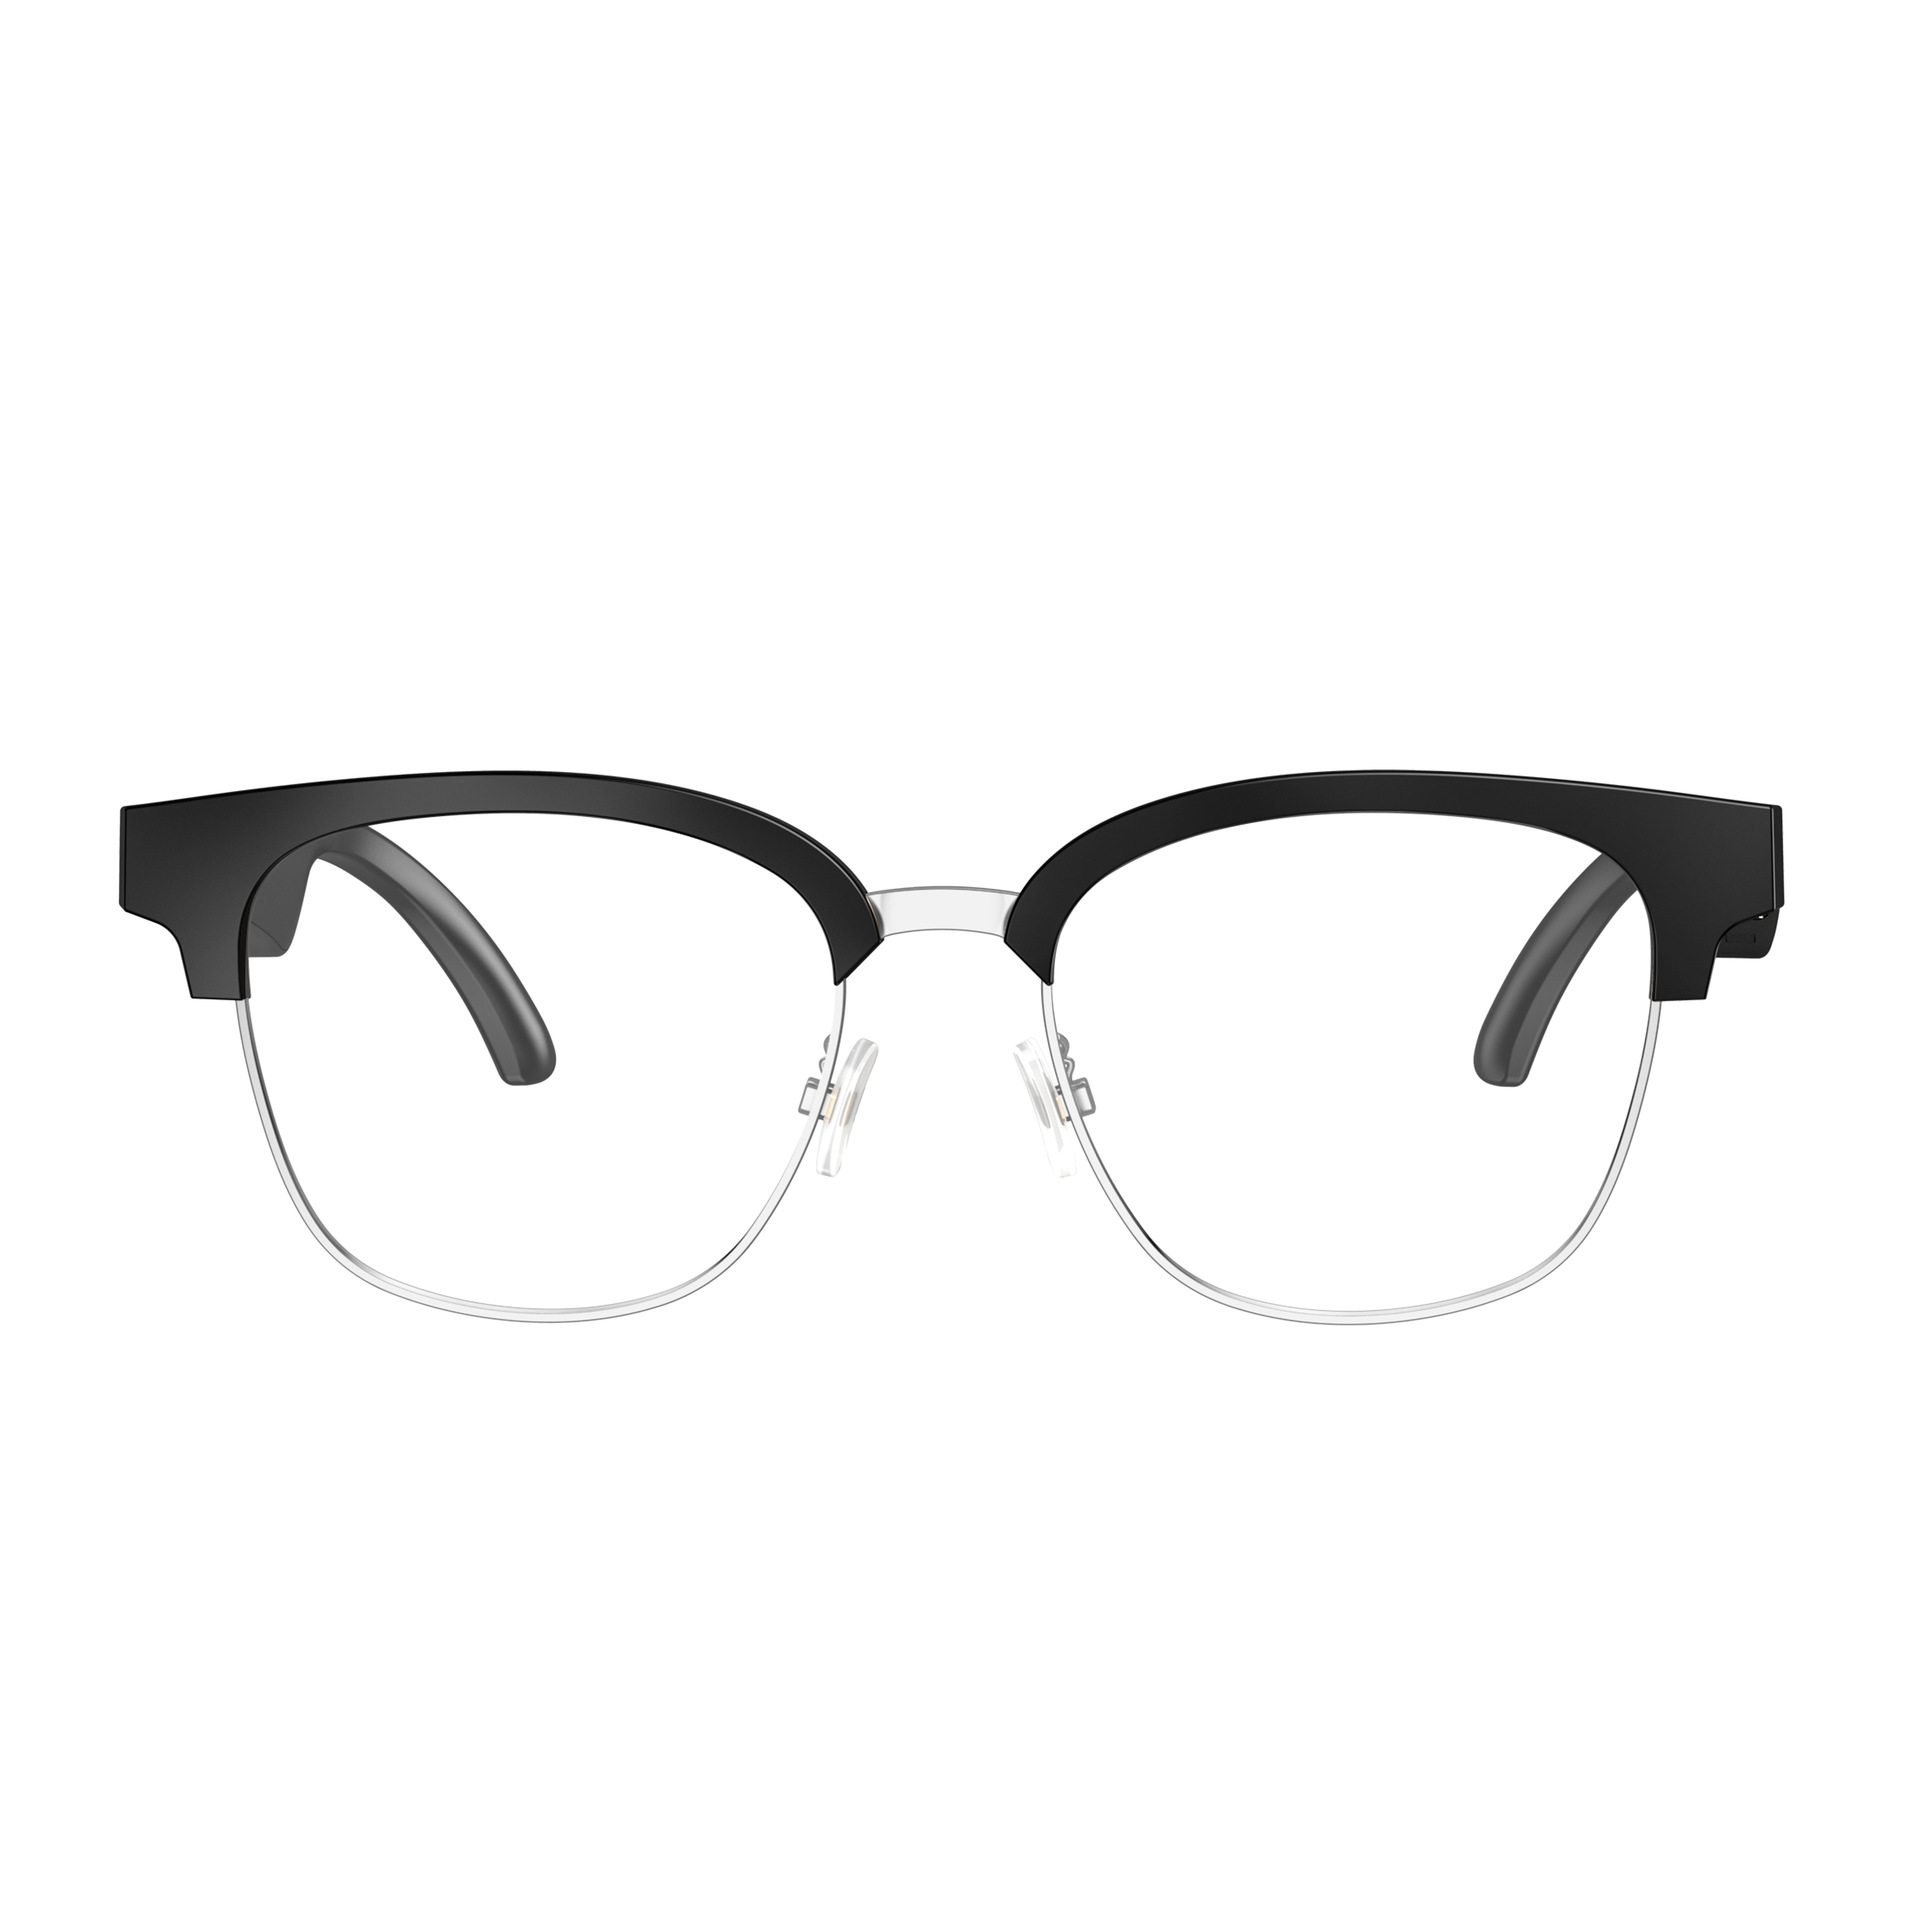 New Sunglasses Vintage Sunglasses Replaceable Optical Lens Smart Glasses Anti-Blue Light Wireless Bluetooth Glasses Tide